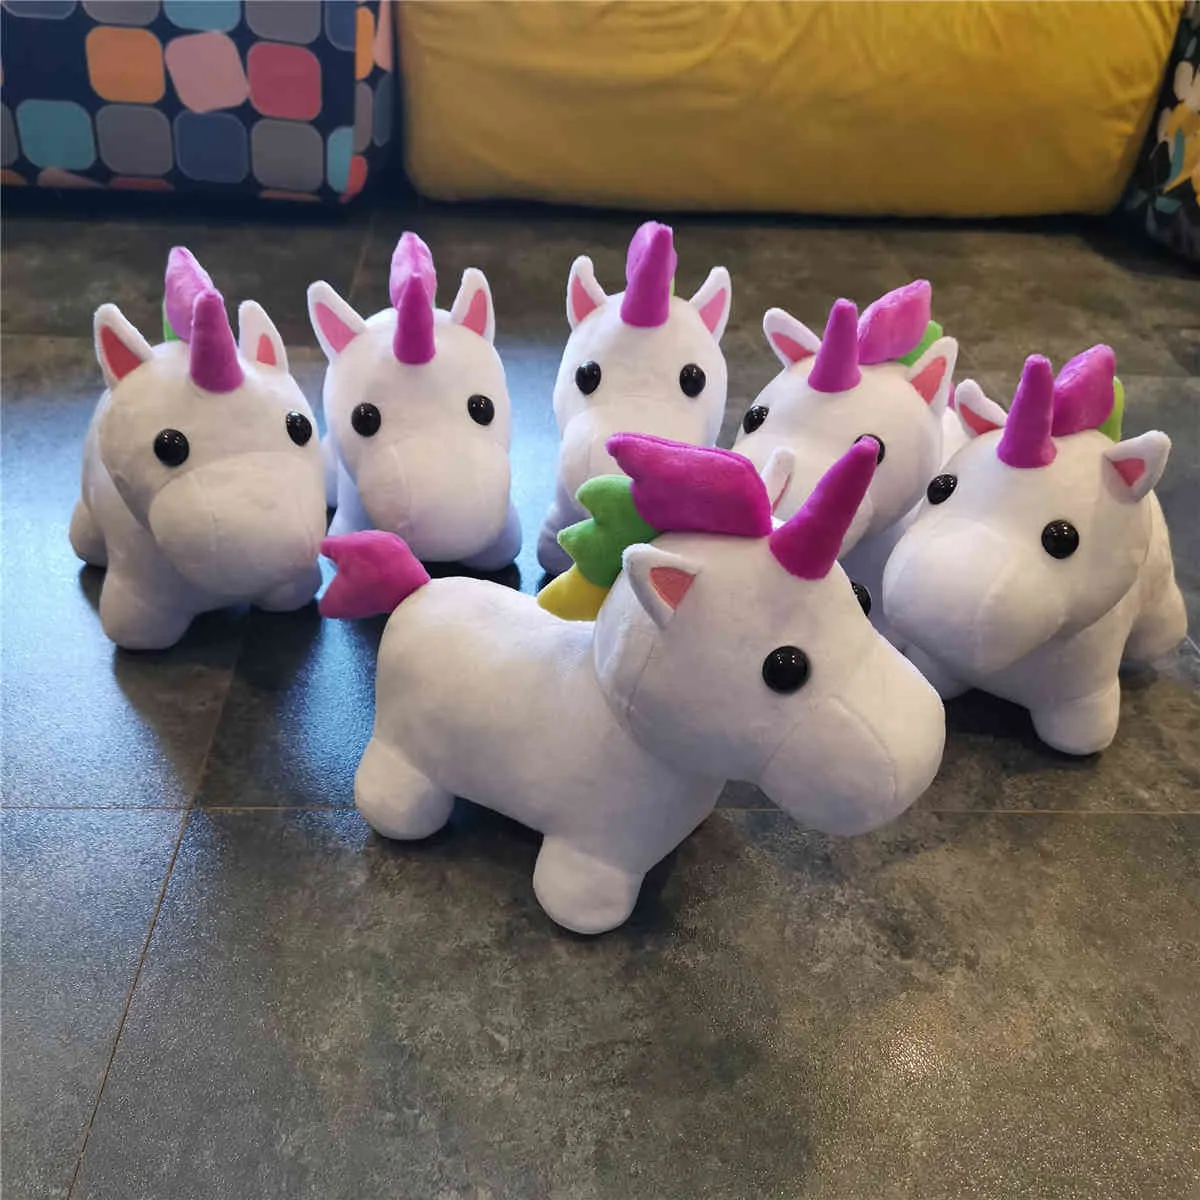 Comprar Adopt me Roblox peluche unicornio de Toy Partner